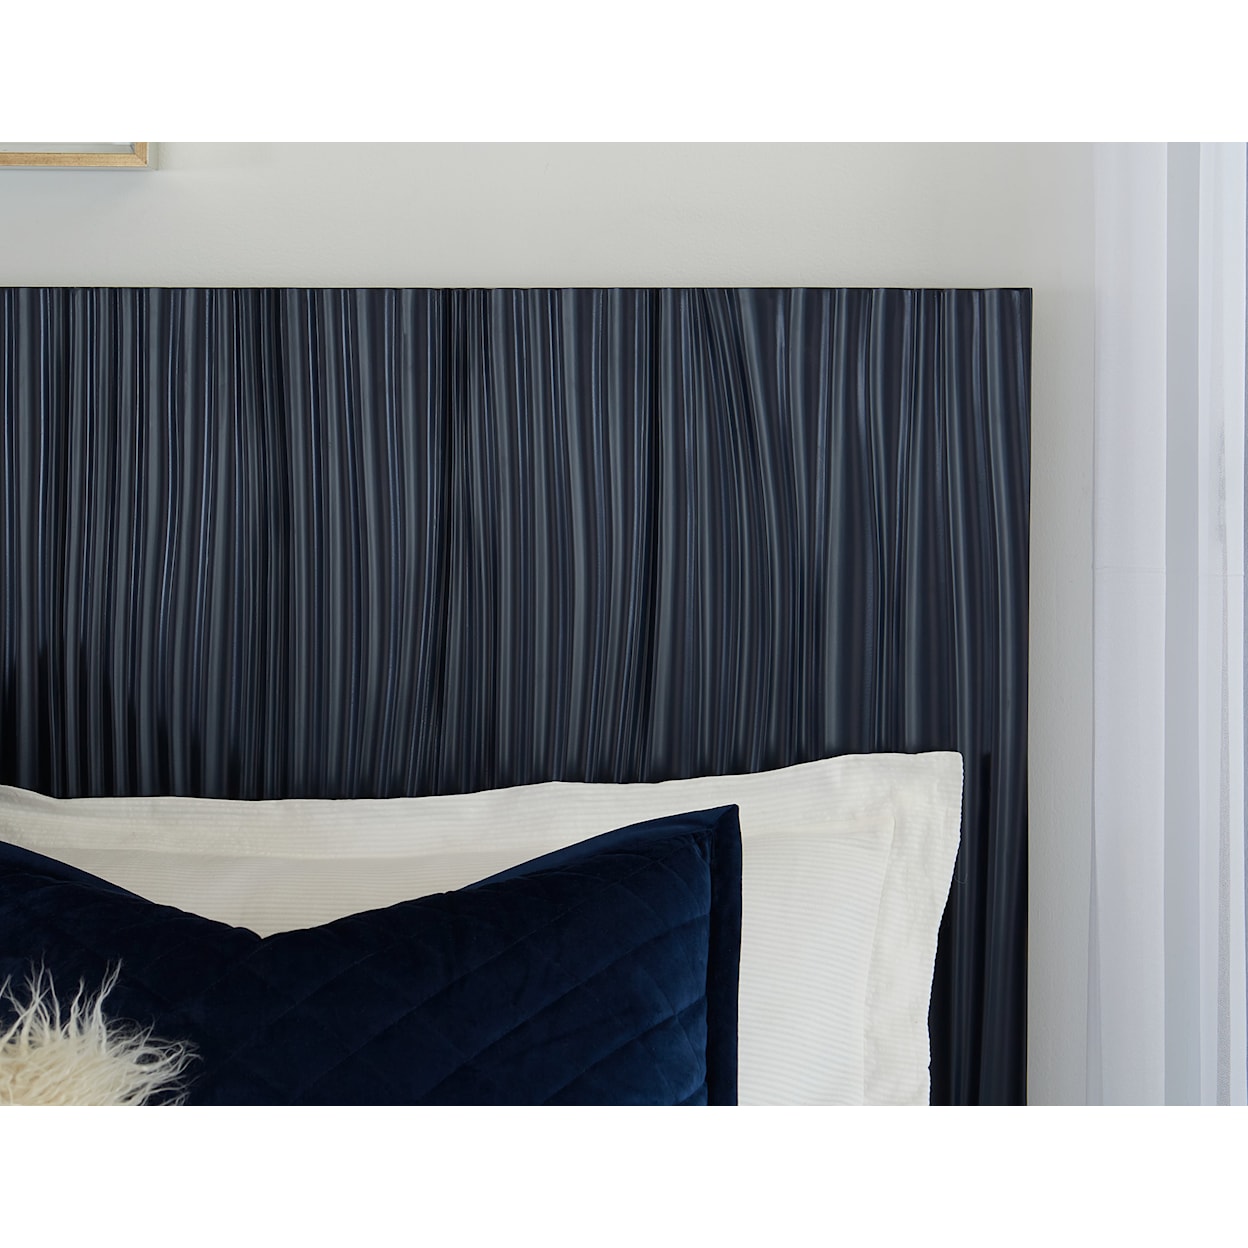 Modus International Argento King Wave-Patterned Bed